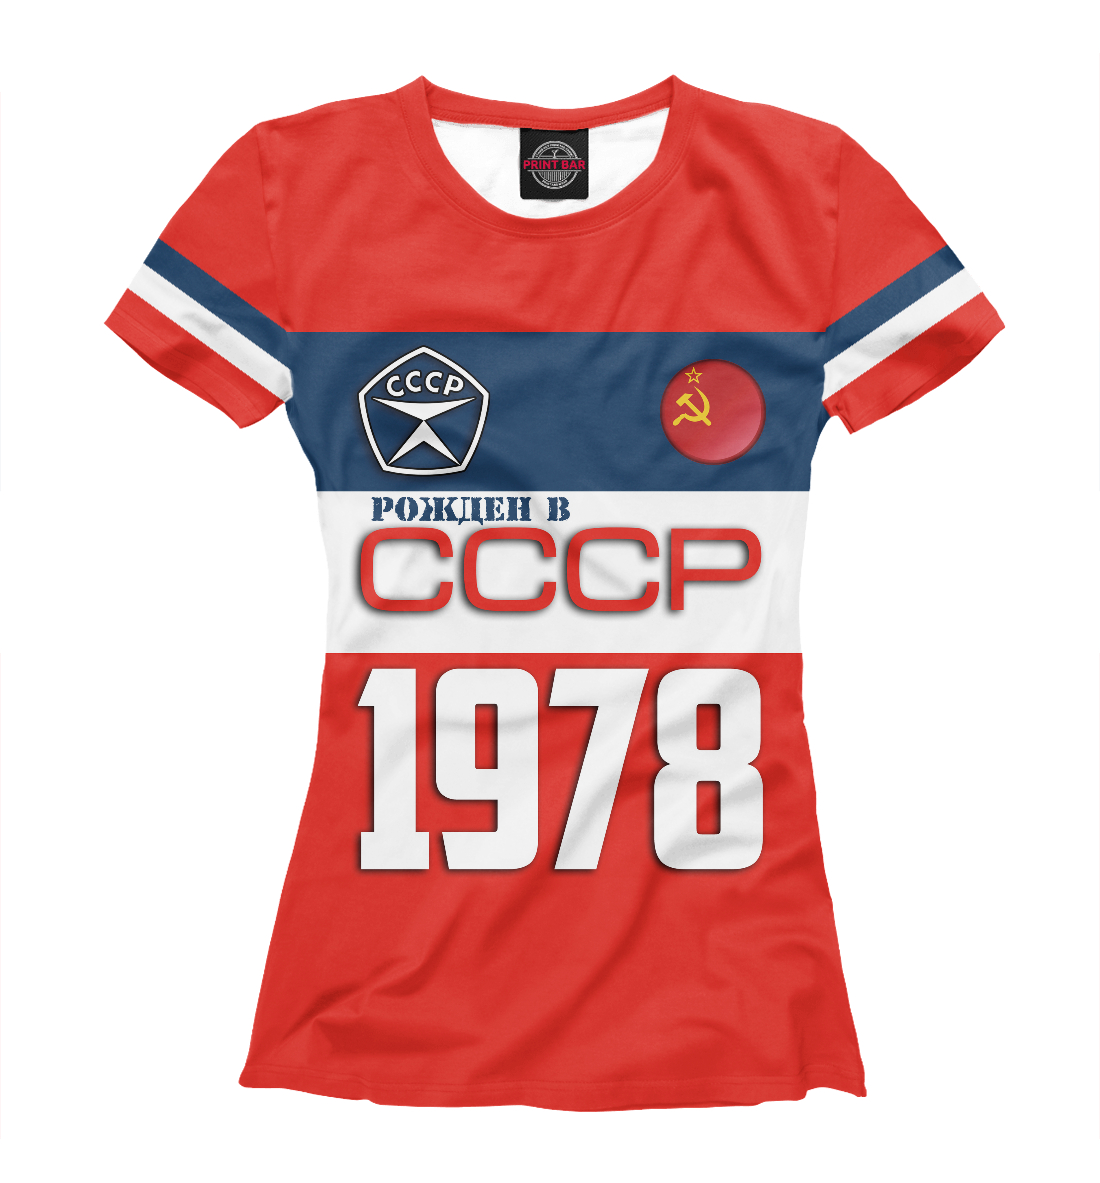 Футболка Рожден в СССР 1978 год для девочек, артикул: SSS-976646-fut-1mp